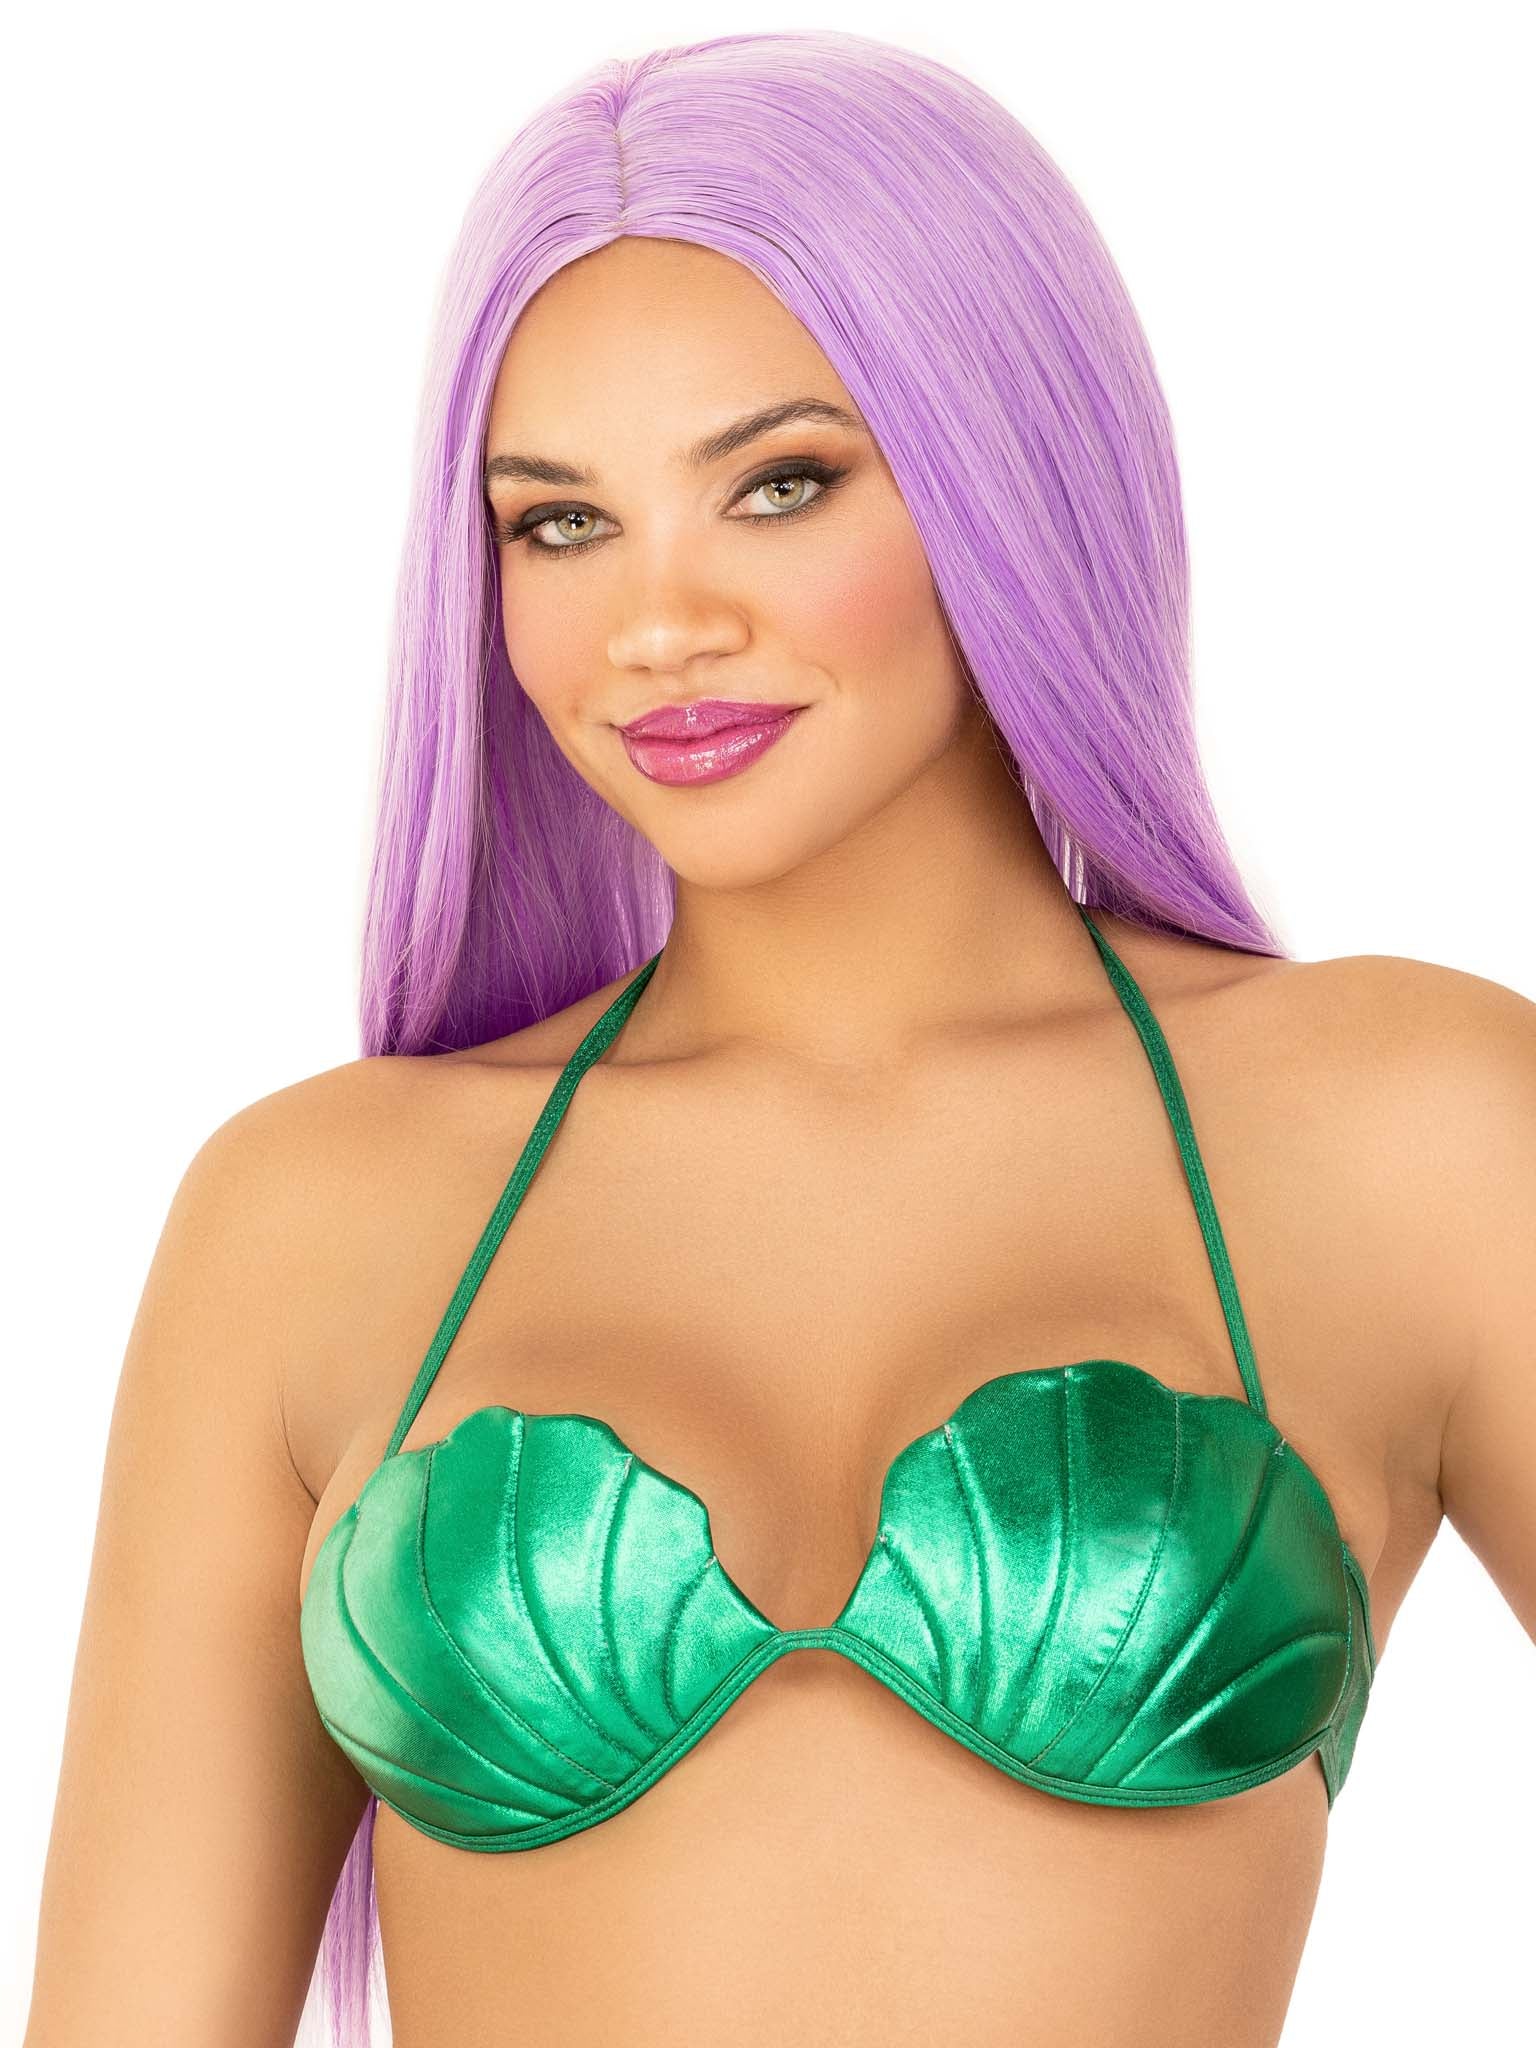 Leg Avenue Mermaid Shell Bra Halloween Costume Accessory 